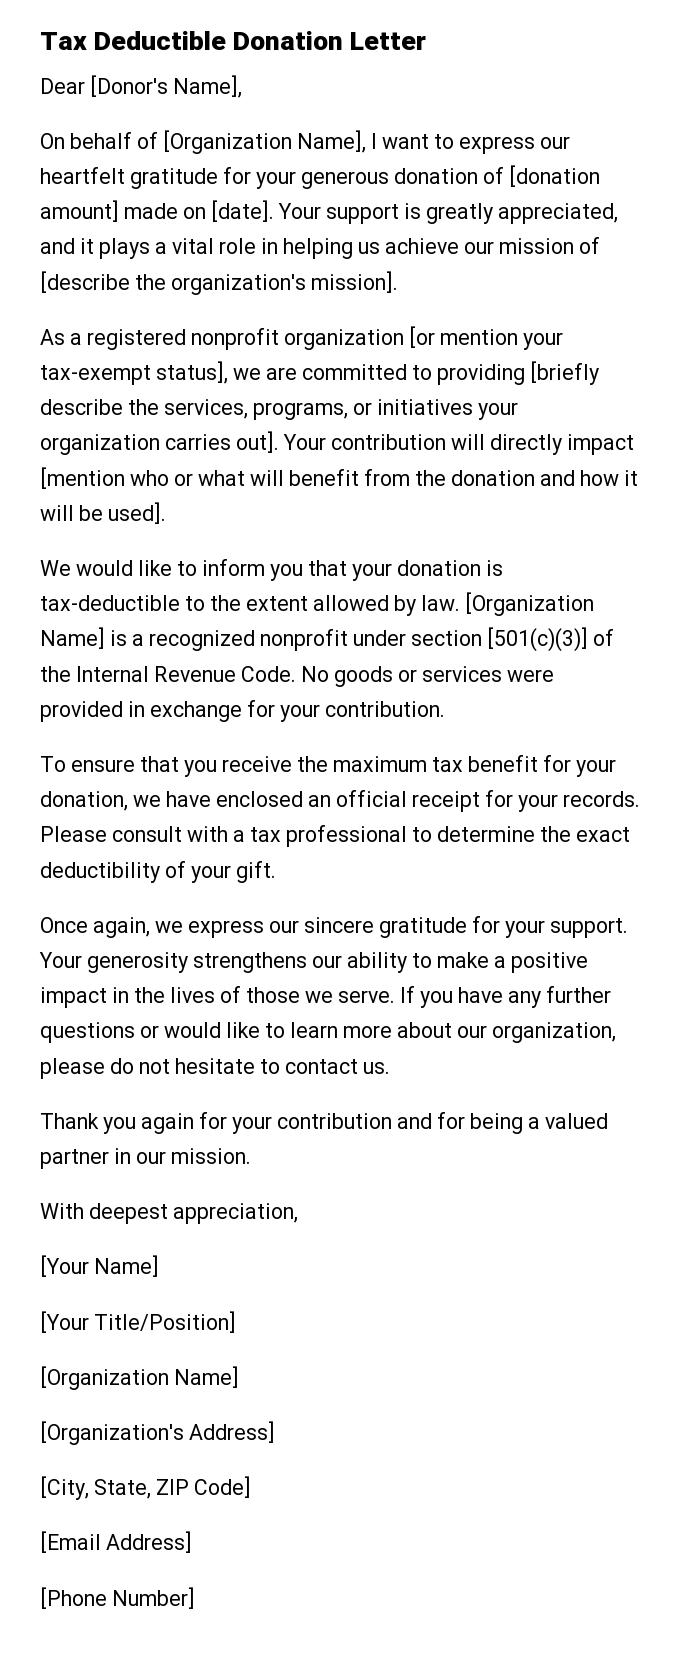 Tax Deductible Donation Letter